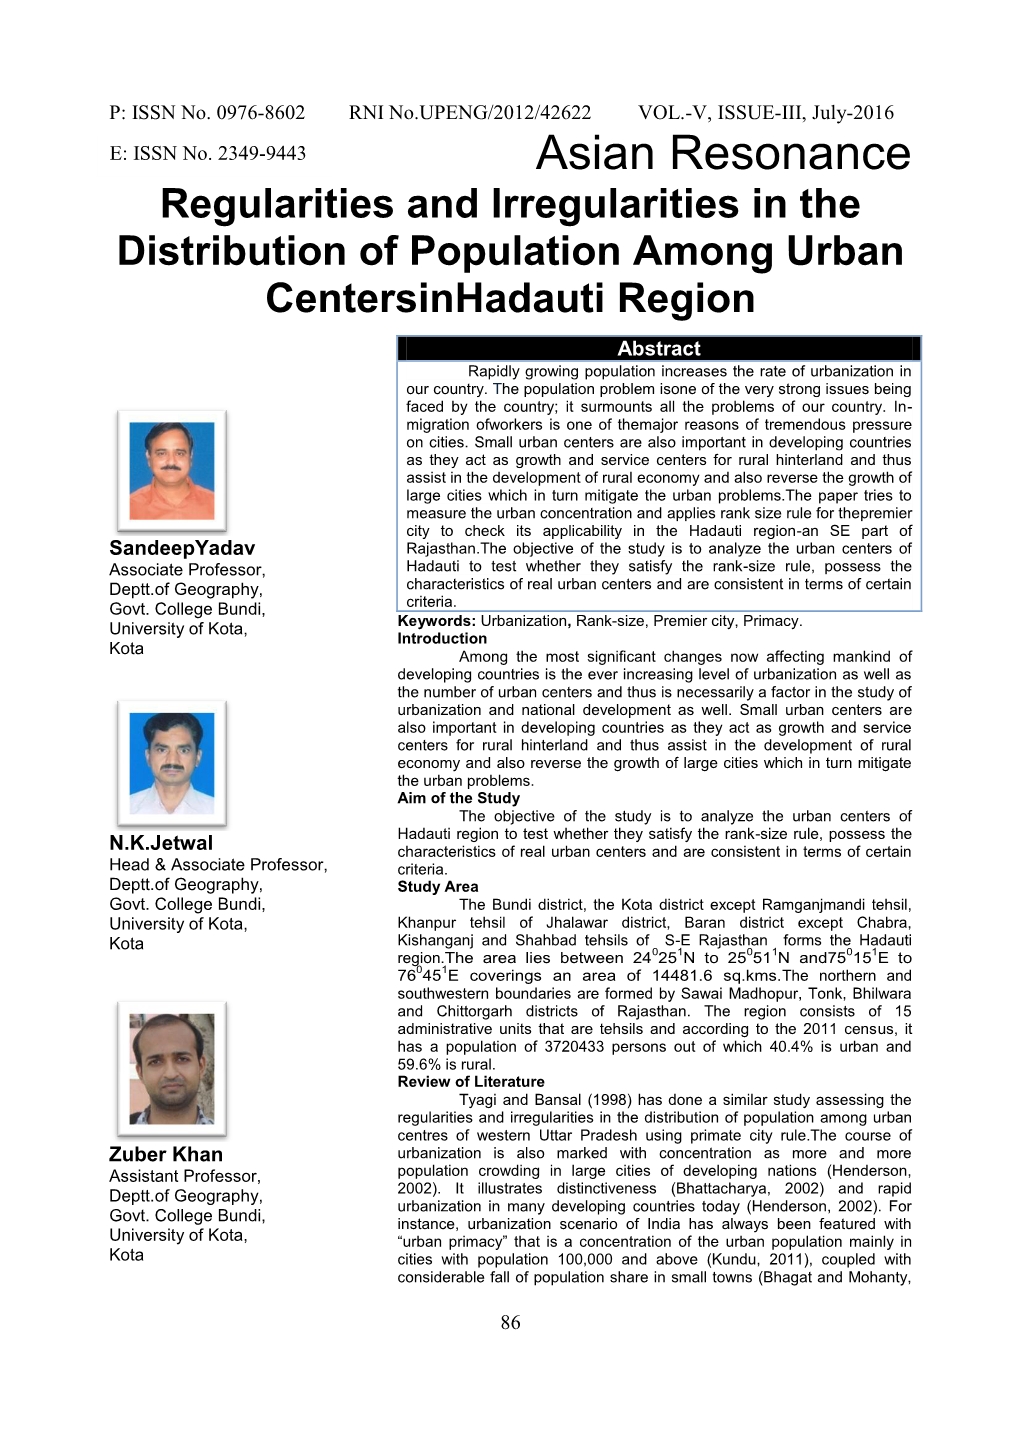 Regularities and Irregularities in the Distribution of Population Among Urban Centersinhadauti Region Sandeep Yadav,N.K.Jetwal